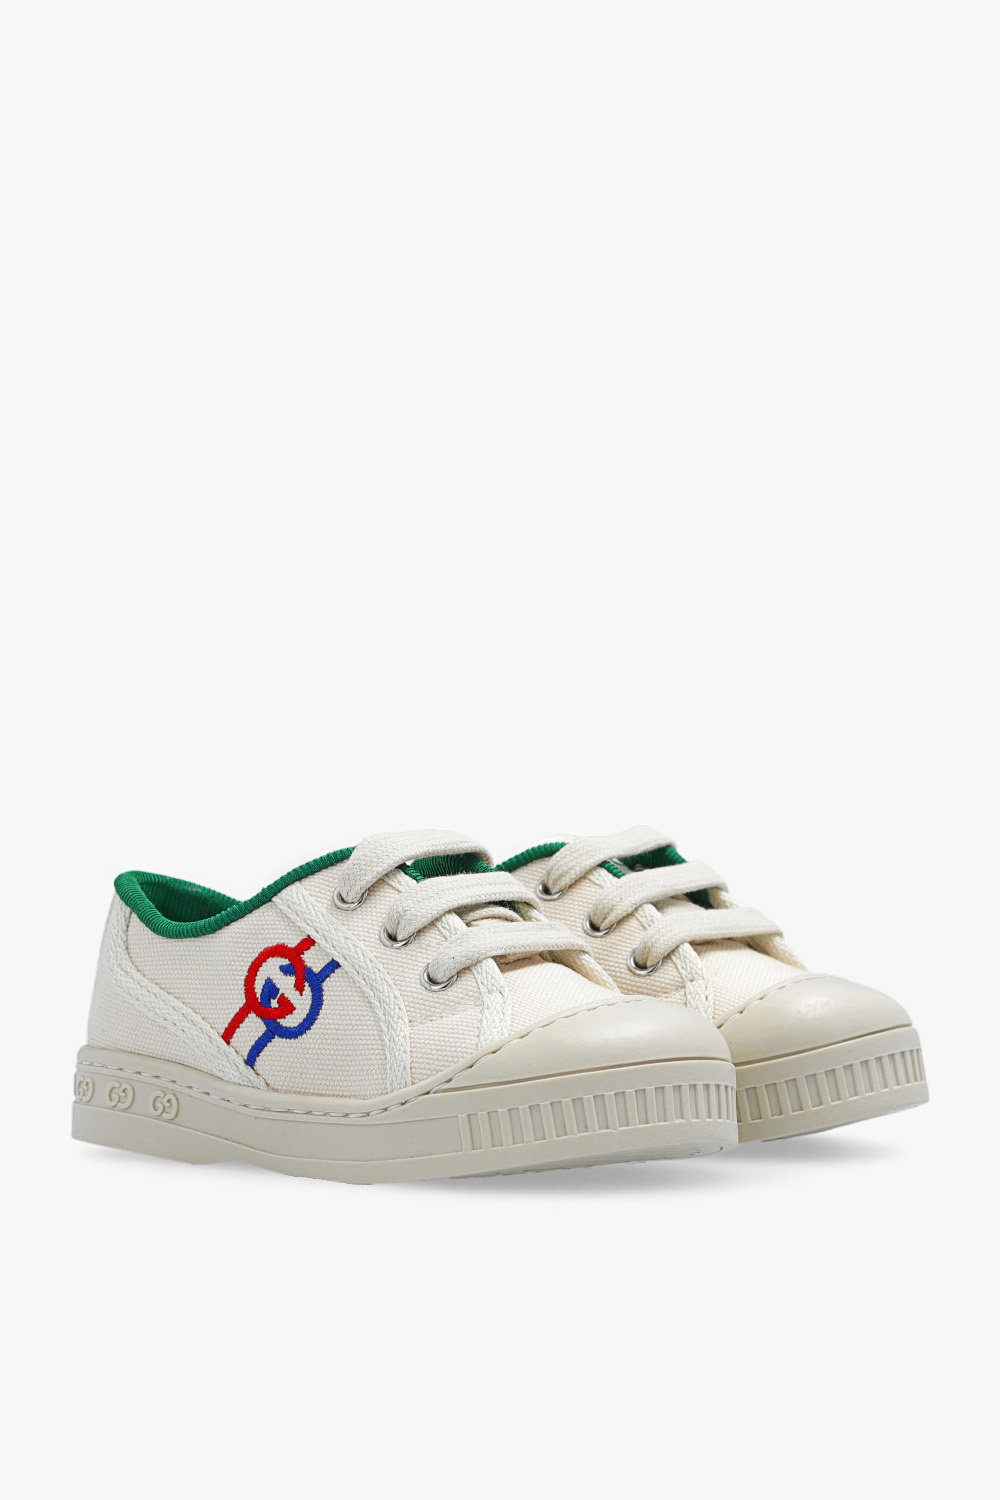 Gucci Kids ‘Tennis 1977’ boots